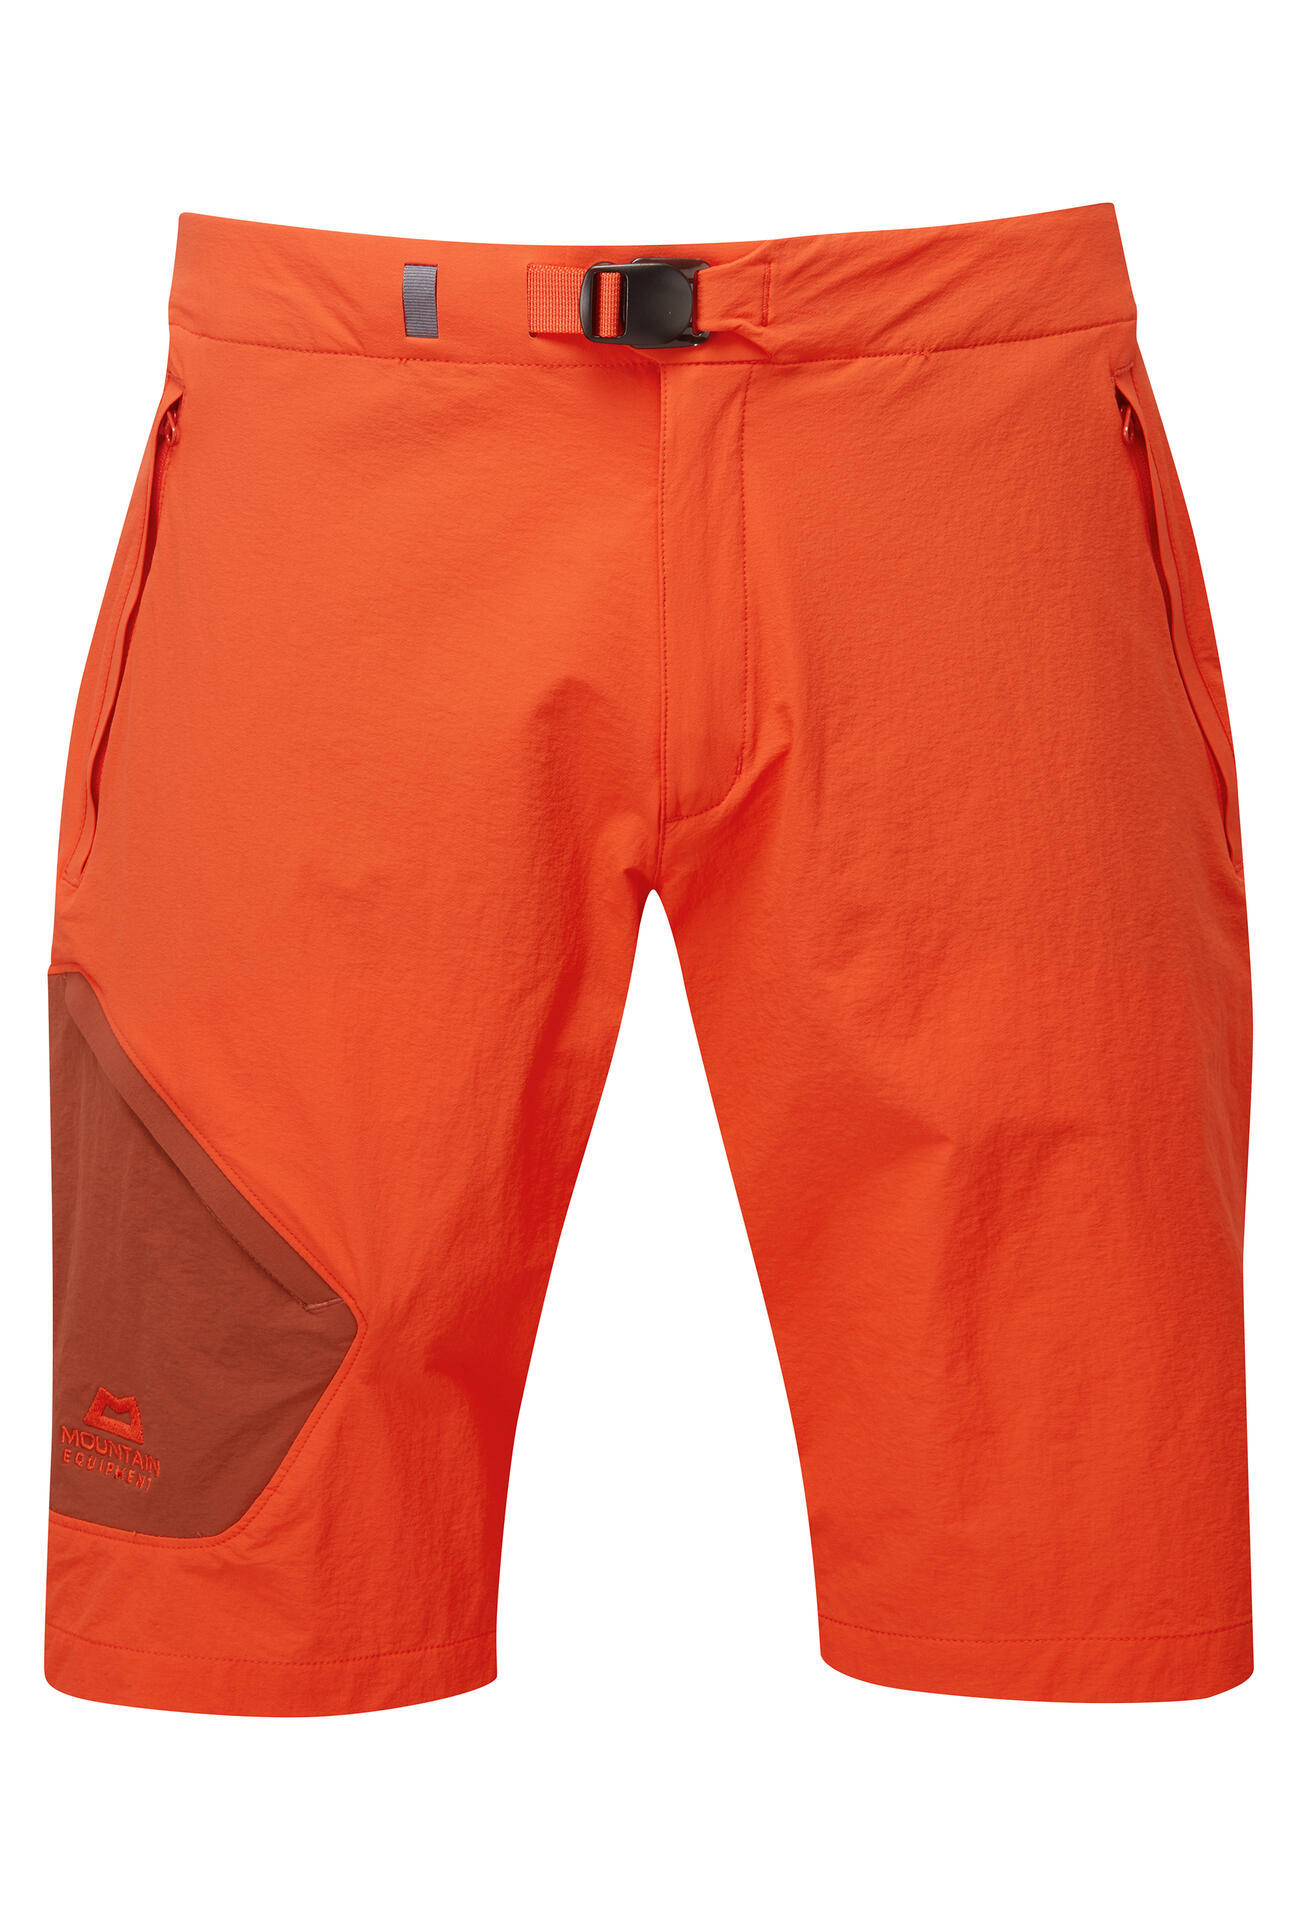 Mountain Equipment Comici Short Men'S Barva: Cardinal Orange/Burnt Henna, Velikost: XXL